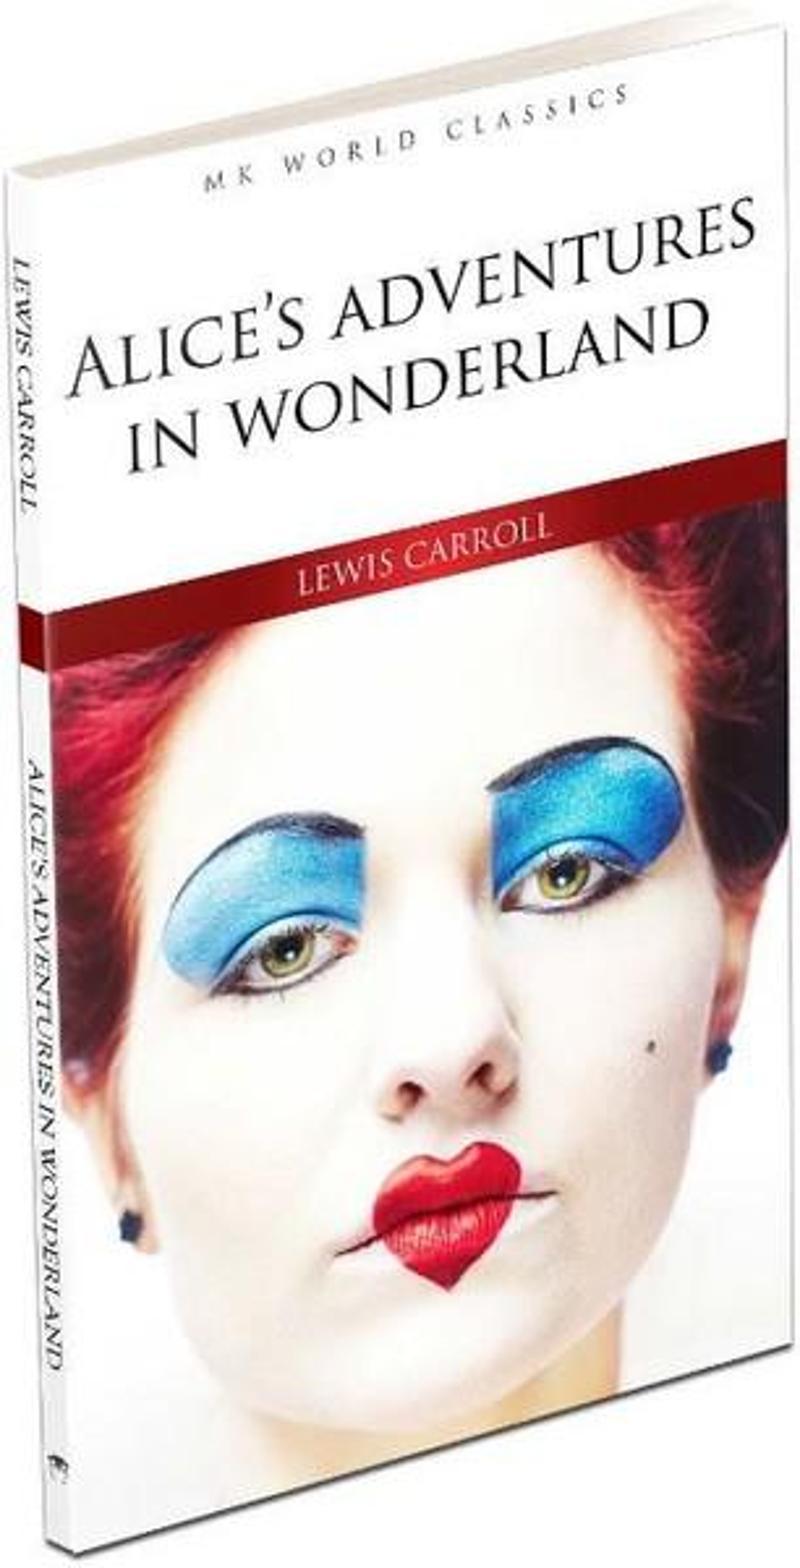 MK Publications Alice's Adventures In Wonderland - İngilizce Klasik Roman - Lewis Carroll